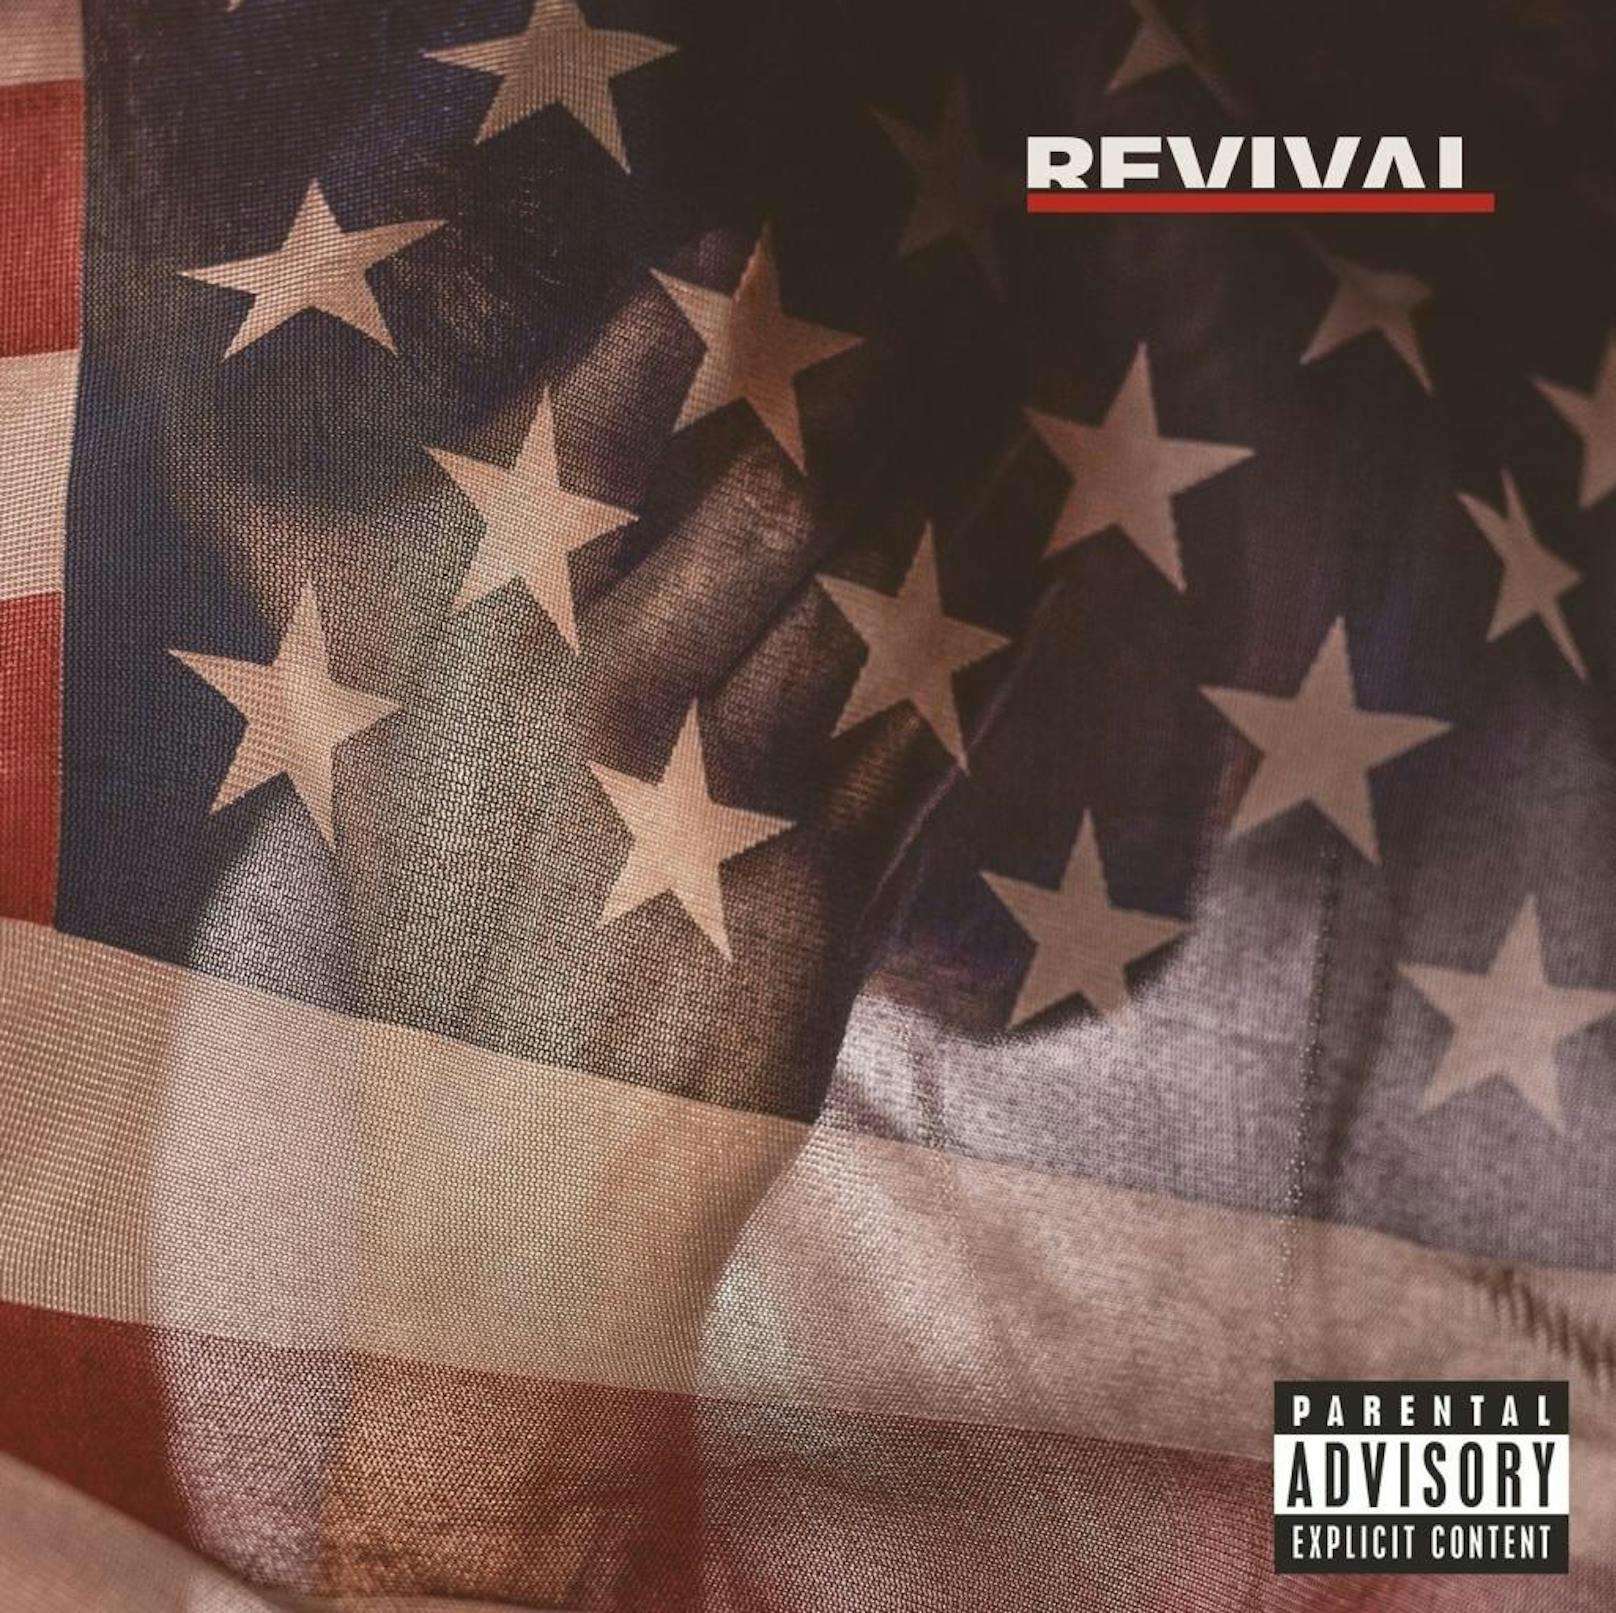 Eminem "Revival"